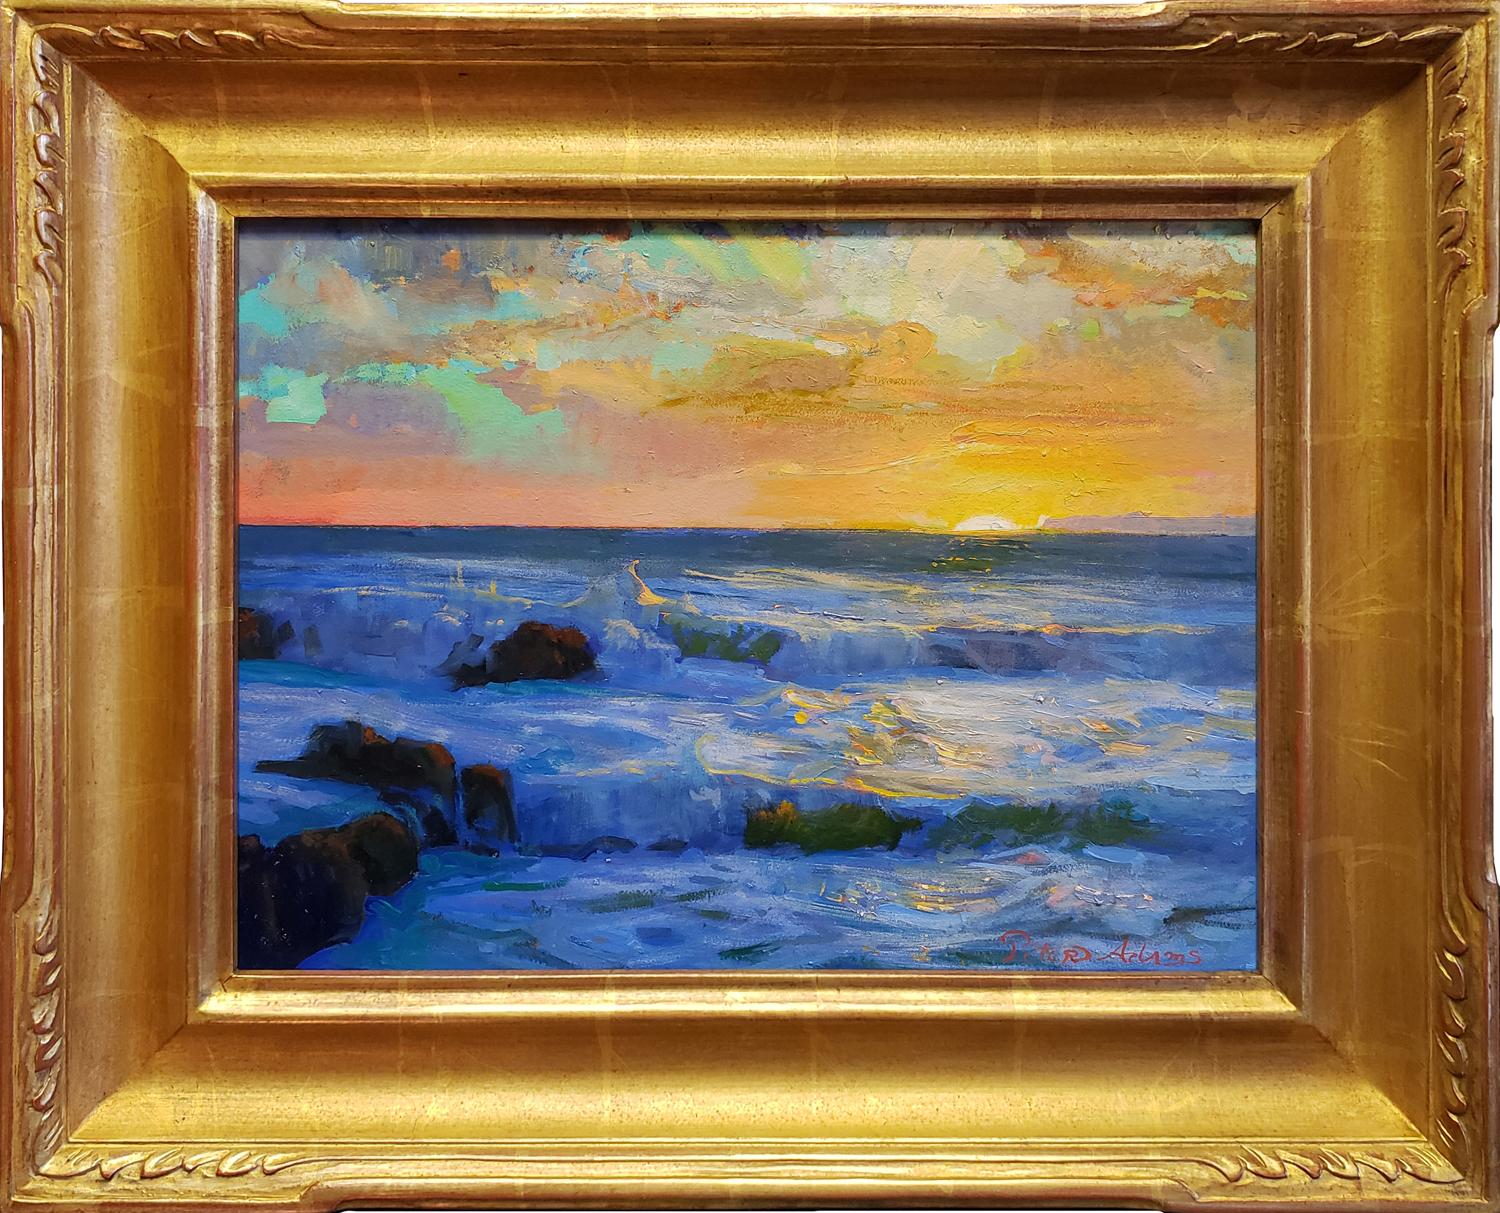 Peter Adams Landscape Painting - Churning Surf at Sunset, Golden Cove; Rancho Palos Verdes